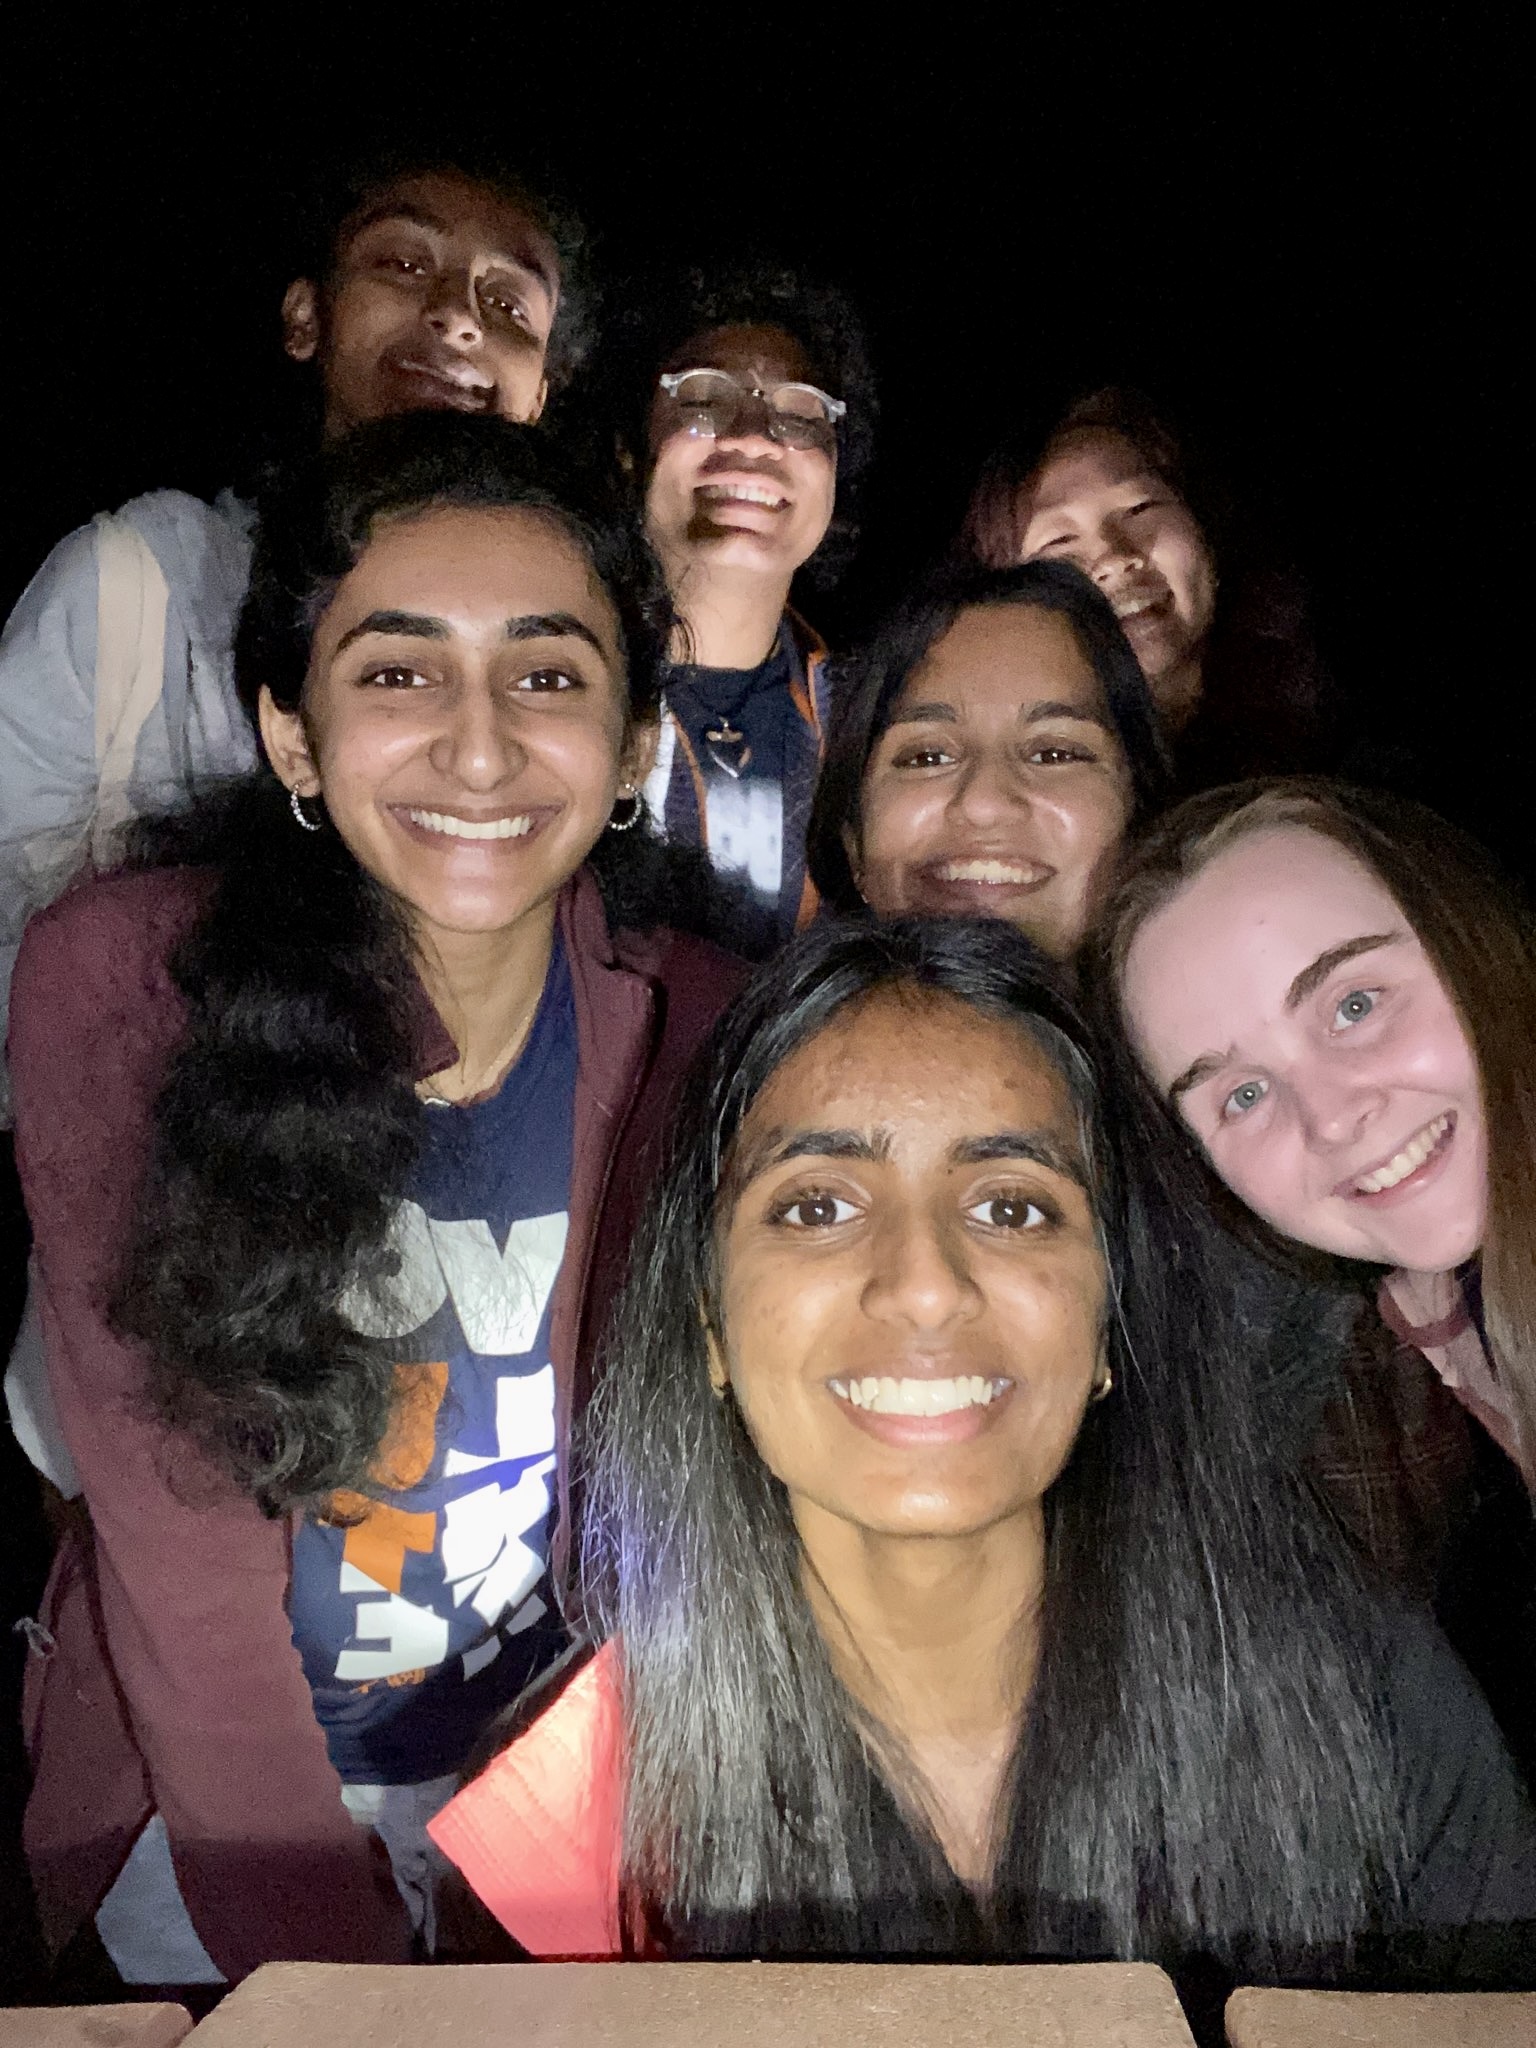 SCC Members take a selfie outdoors at night